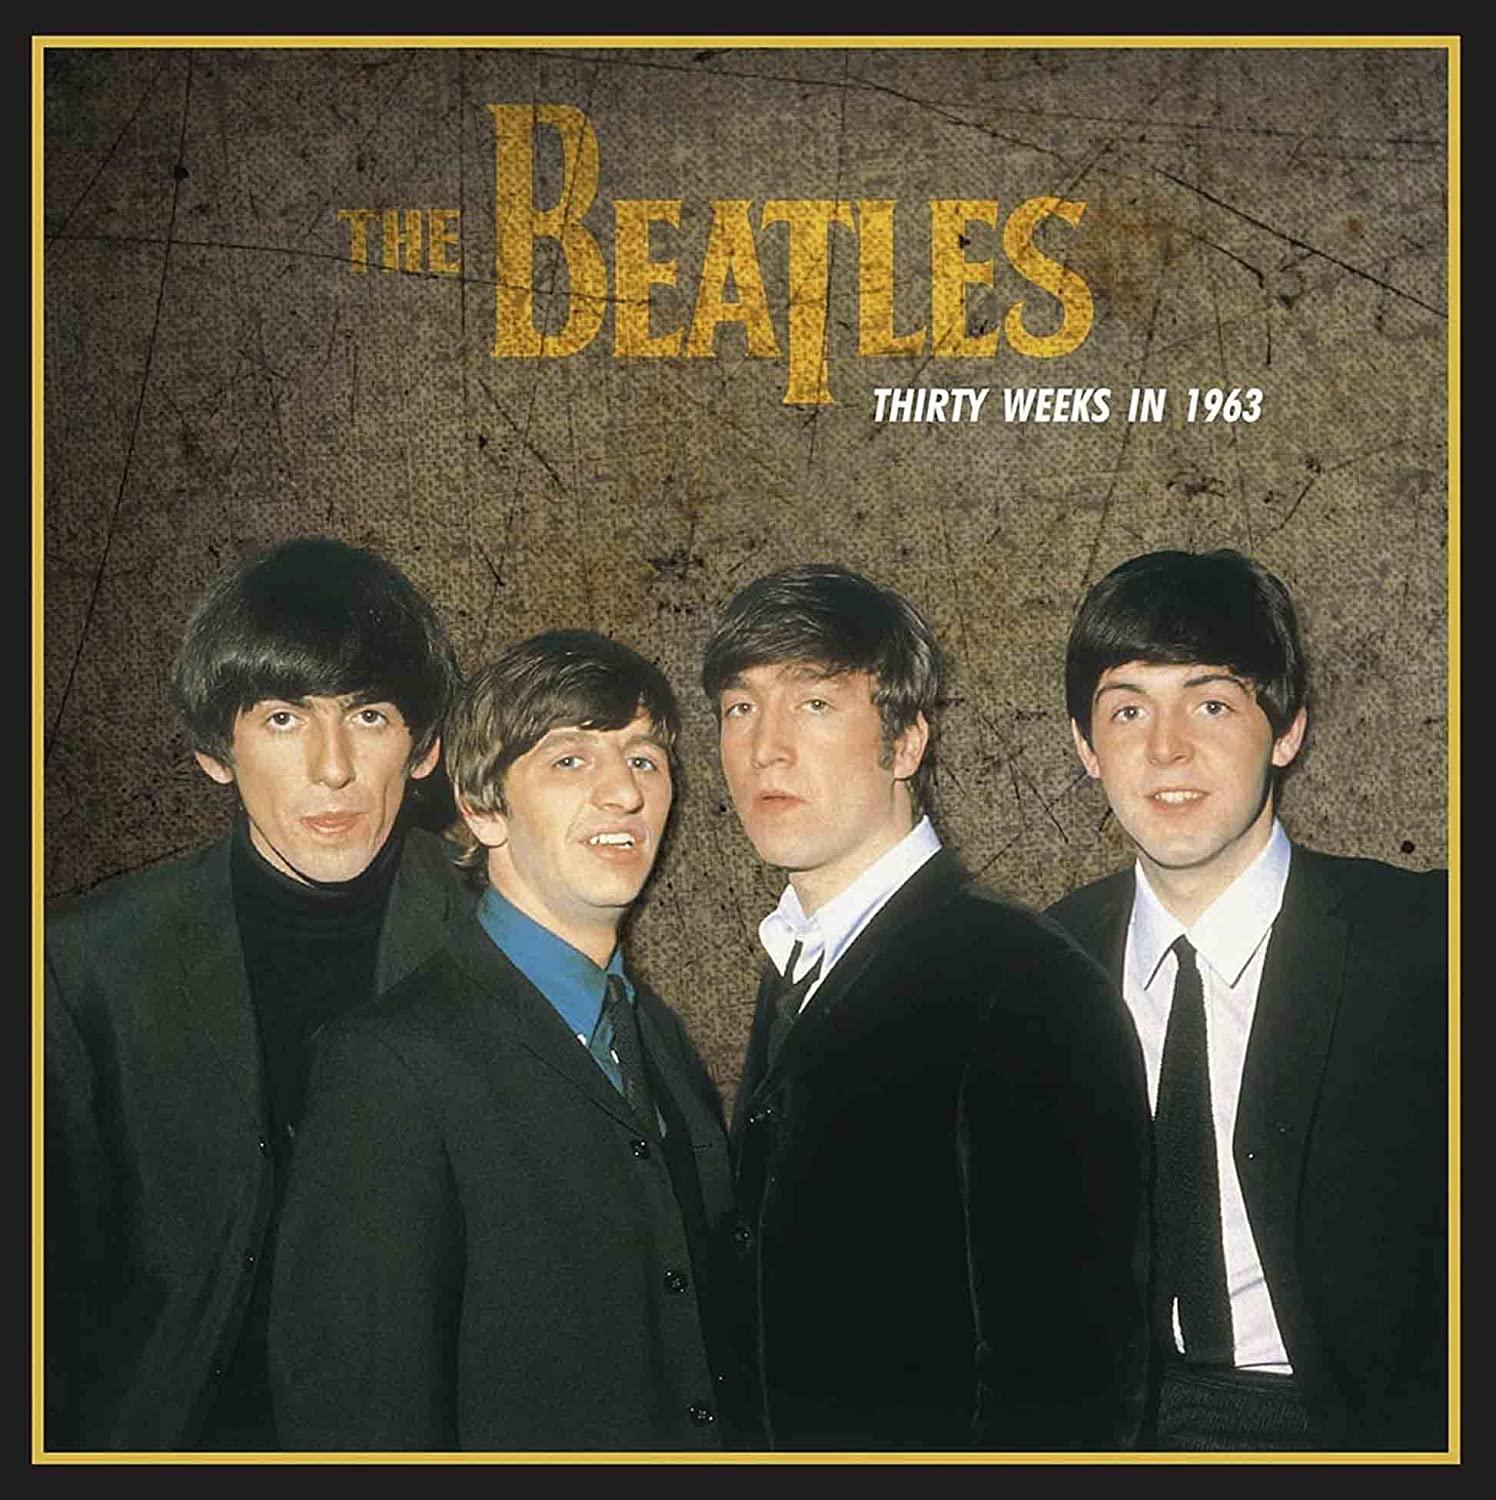 The Beatles - Thirty Weeks In 1963 (Limited Import, 180 Gram) (LP)